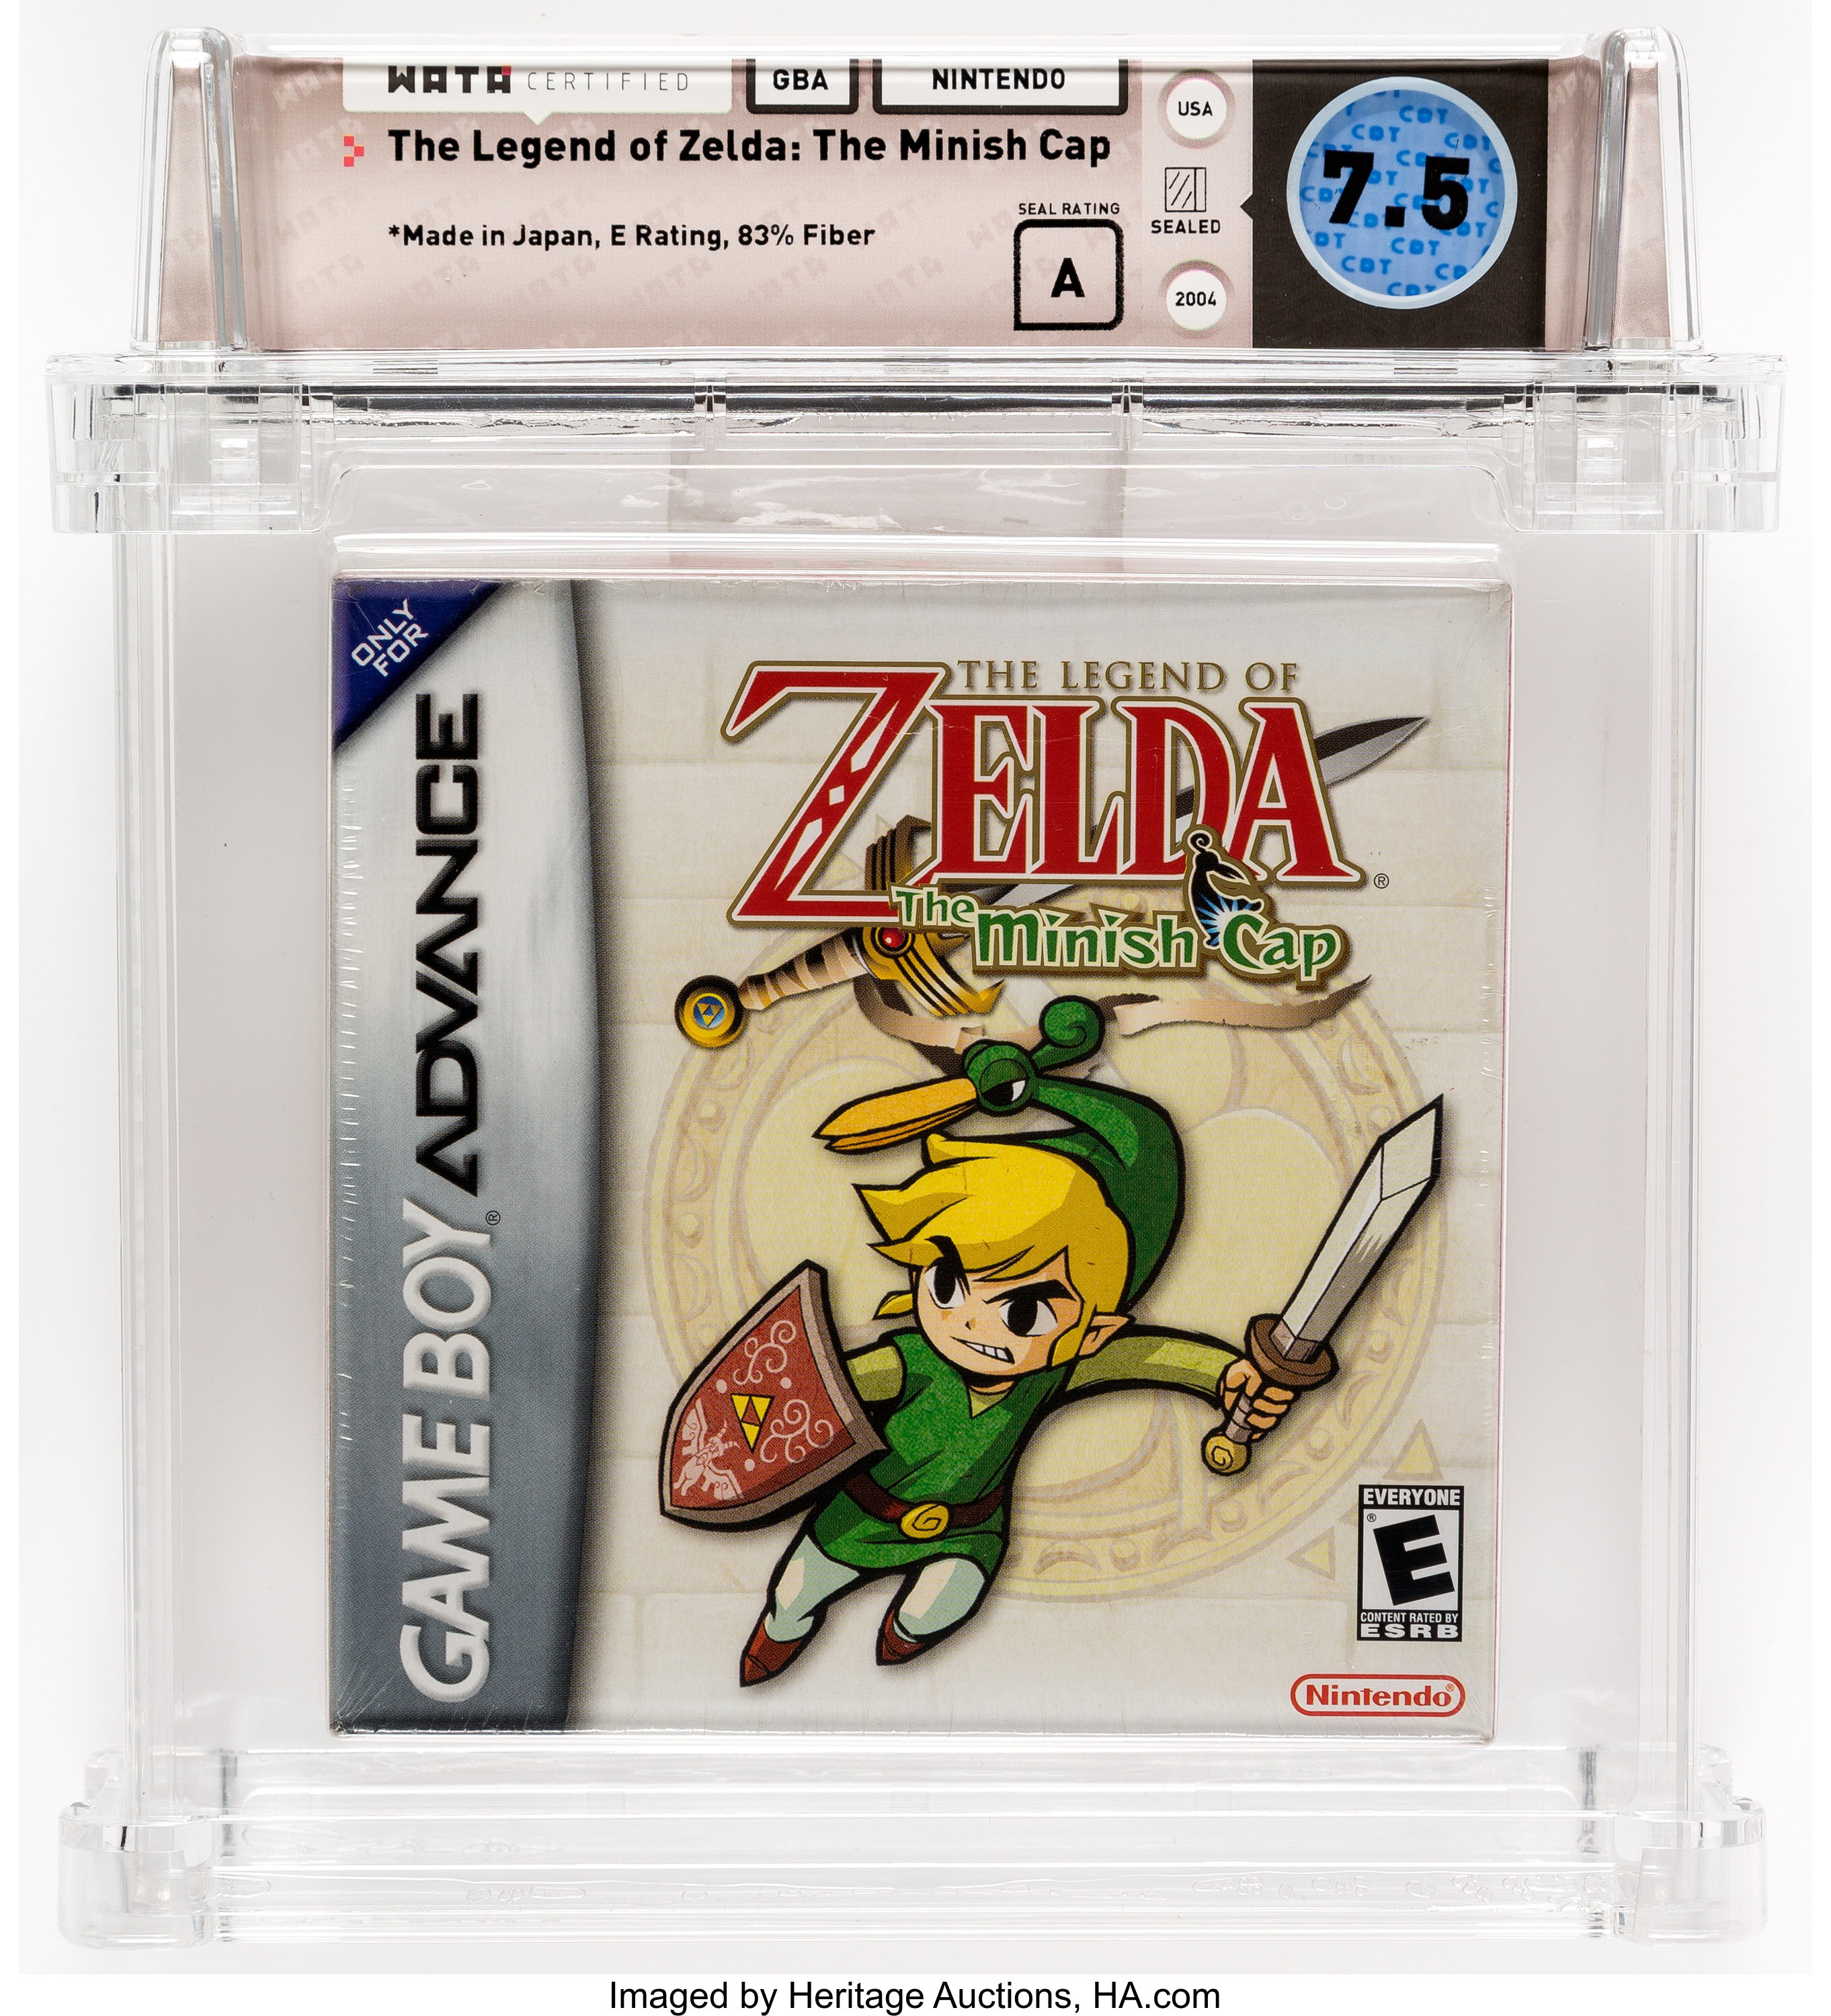 The Legend of Zelda: The Minish Cap (GBA, Nintendo, 2004) Wata 7.5 